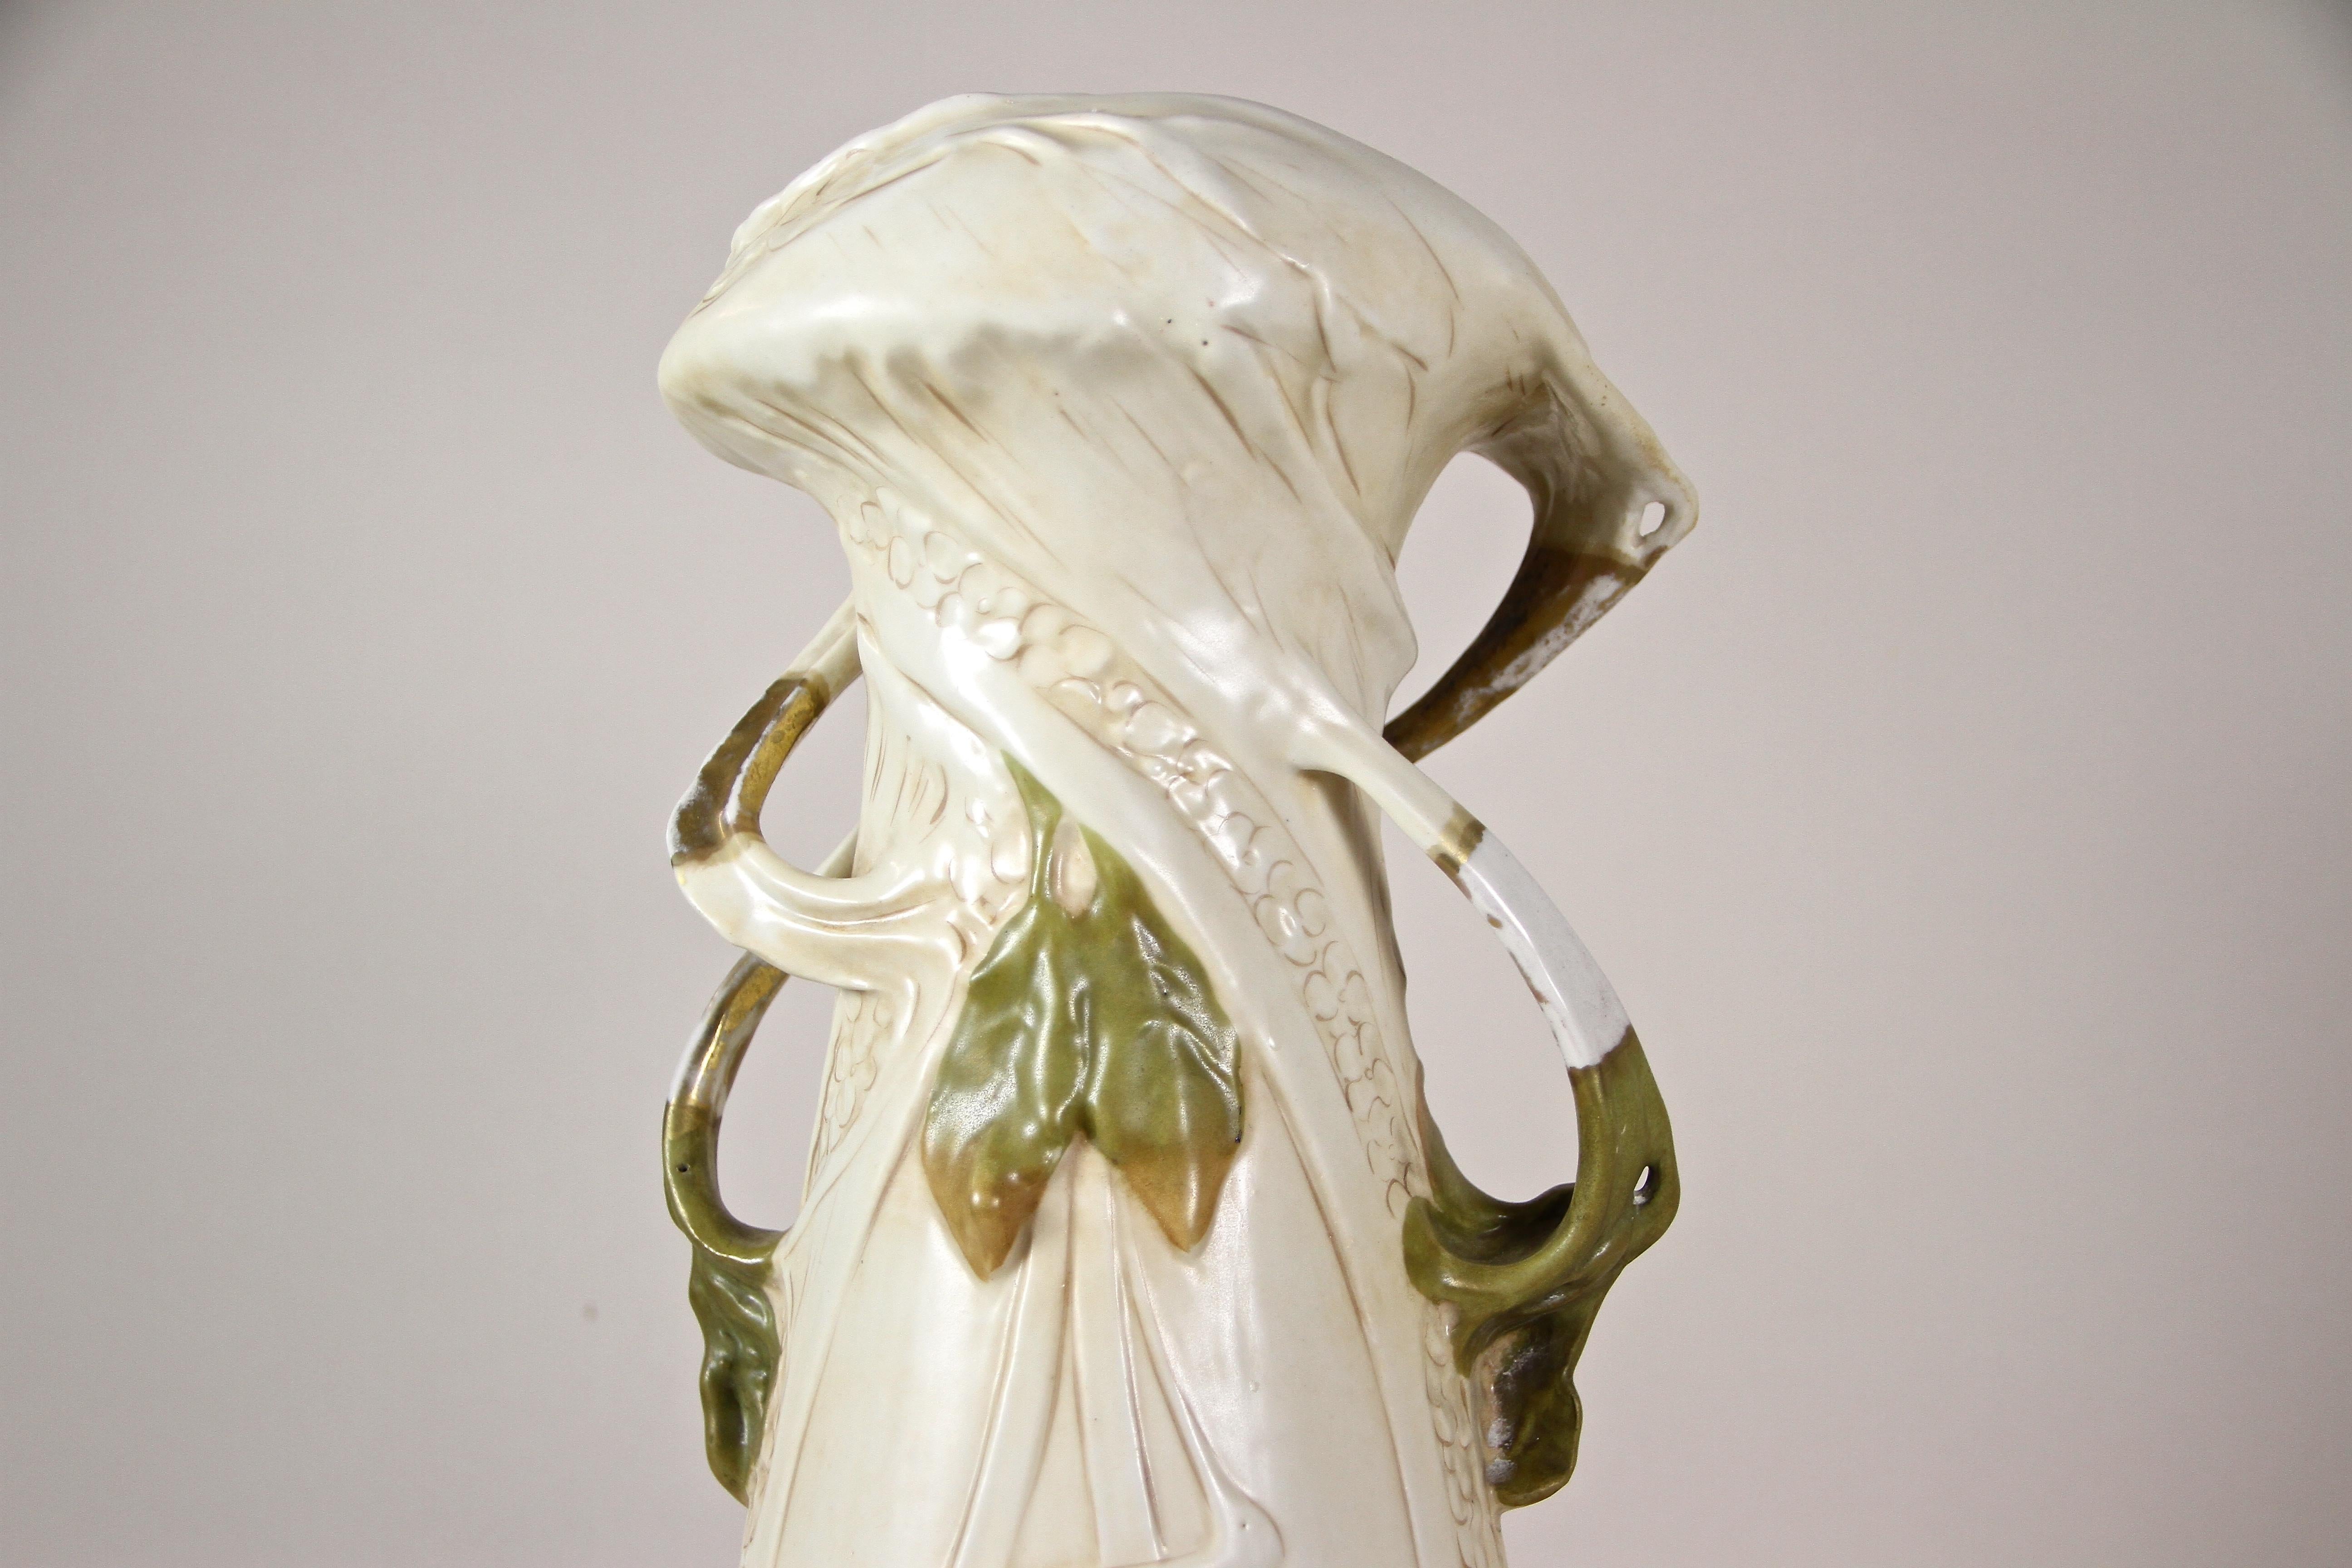 Hand-Painted Art Nouveau Porcelain Vase with Olives by Royal Dux, Bohemia, circa 1900